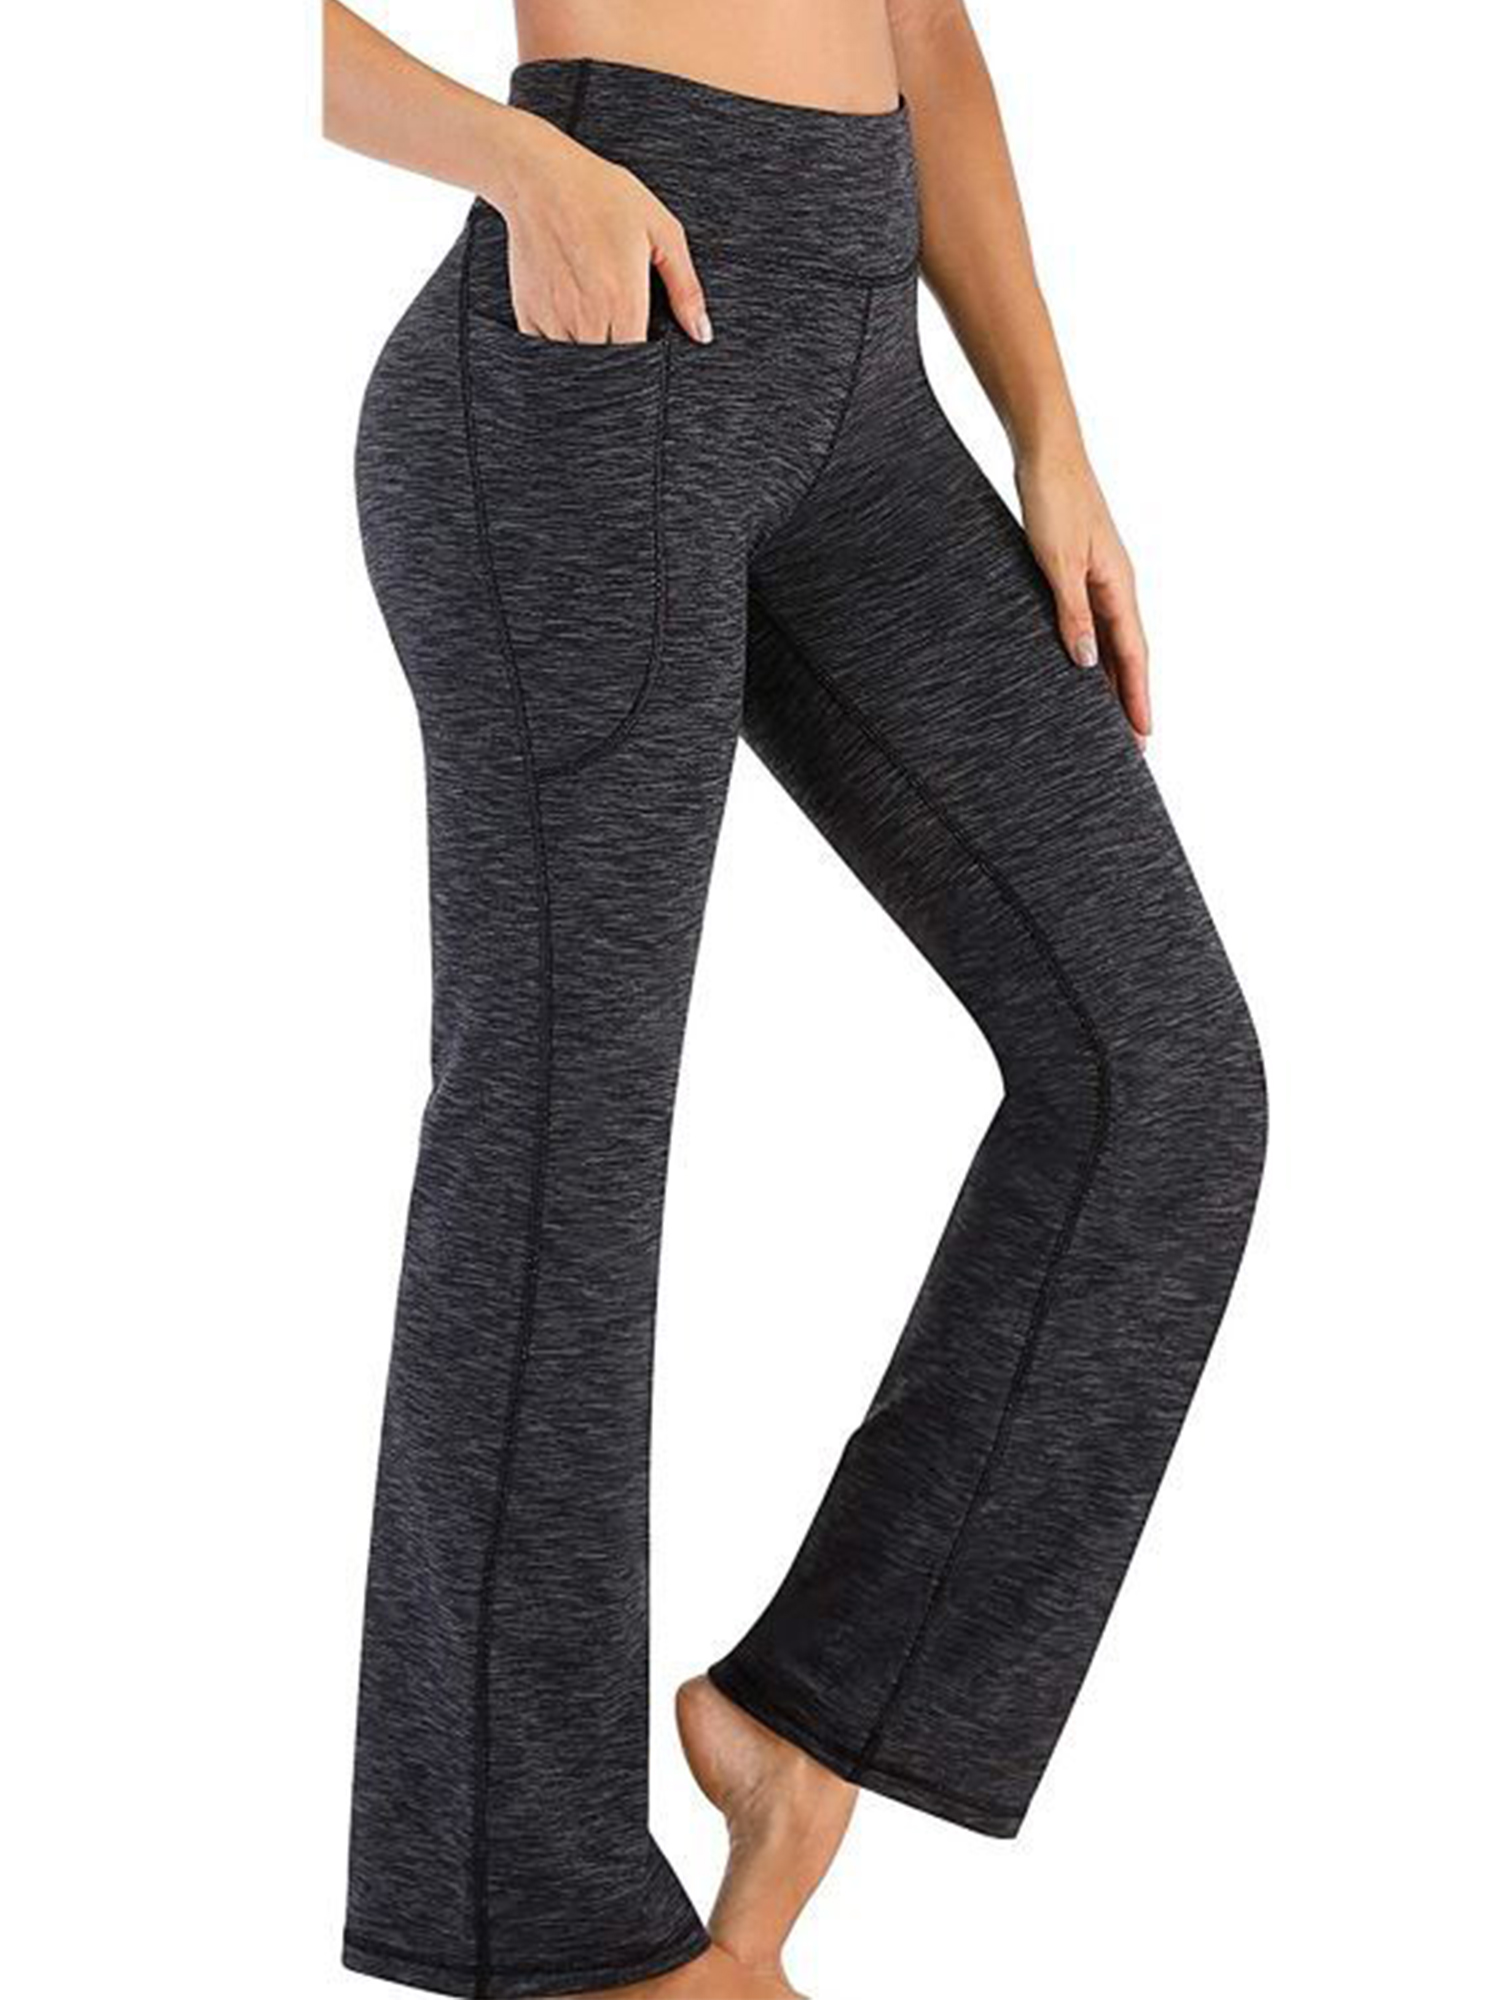 Women/'s Elastic High Waist Casual Joggers Pants Gym Activewear Trouser Bottoms